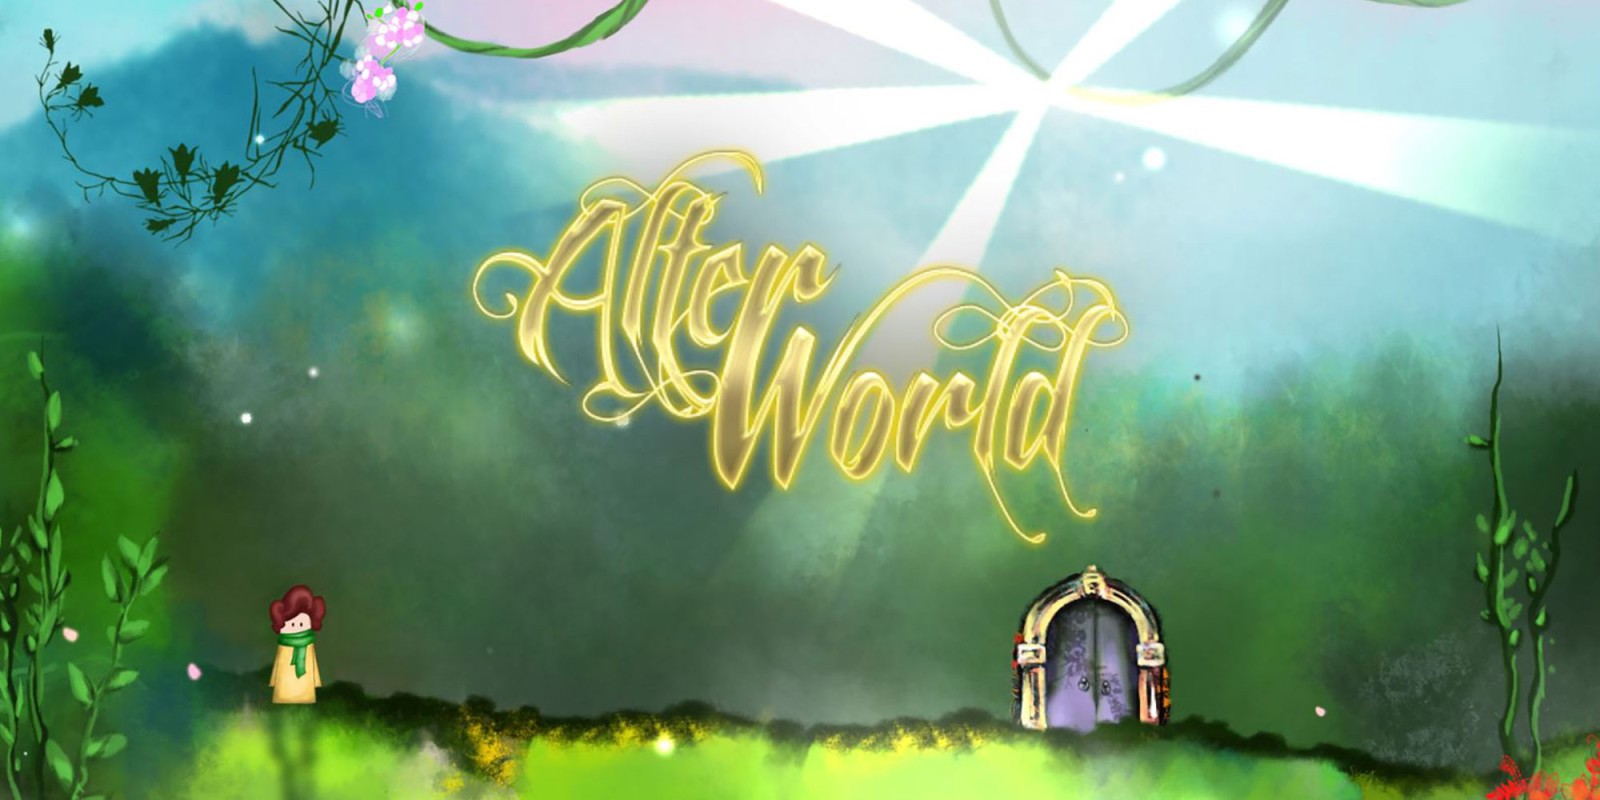 Alter World